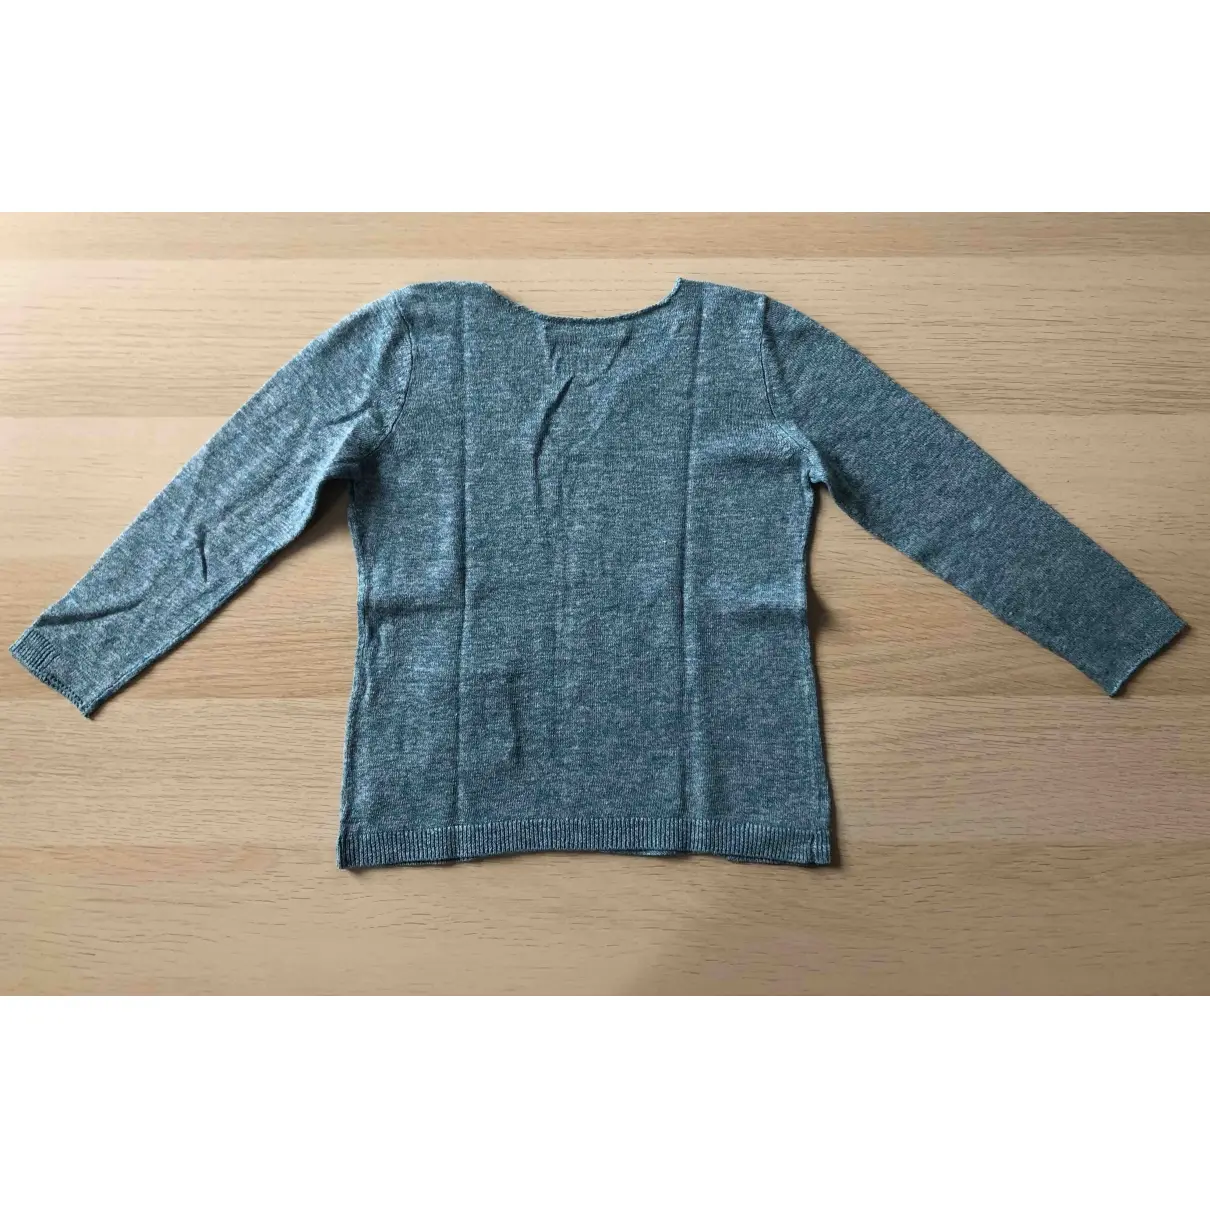 Buy Bonpoint Linen sweater online